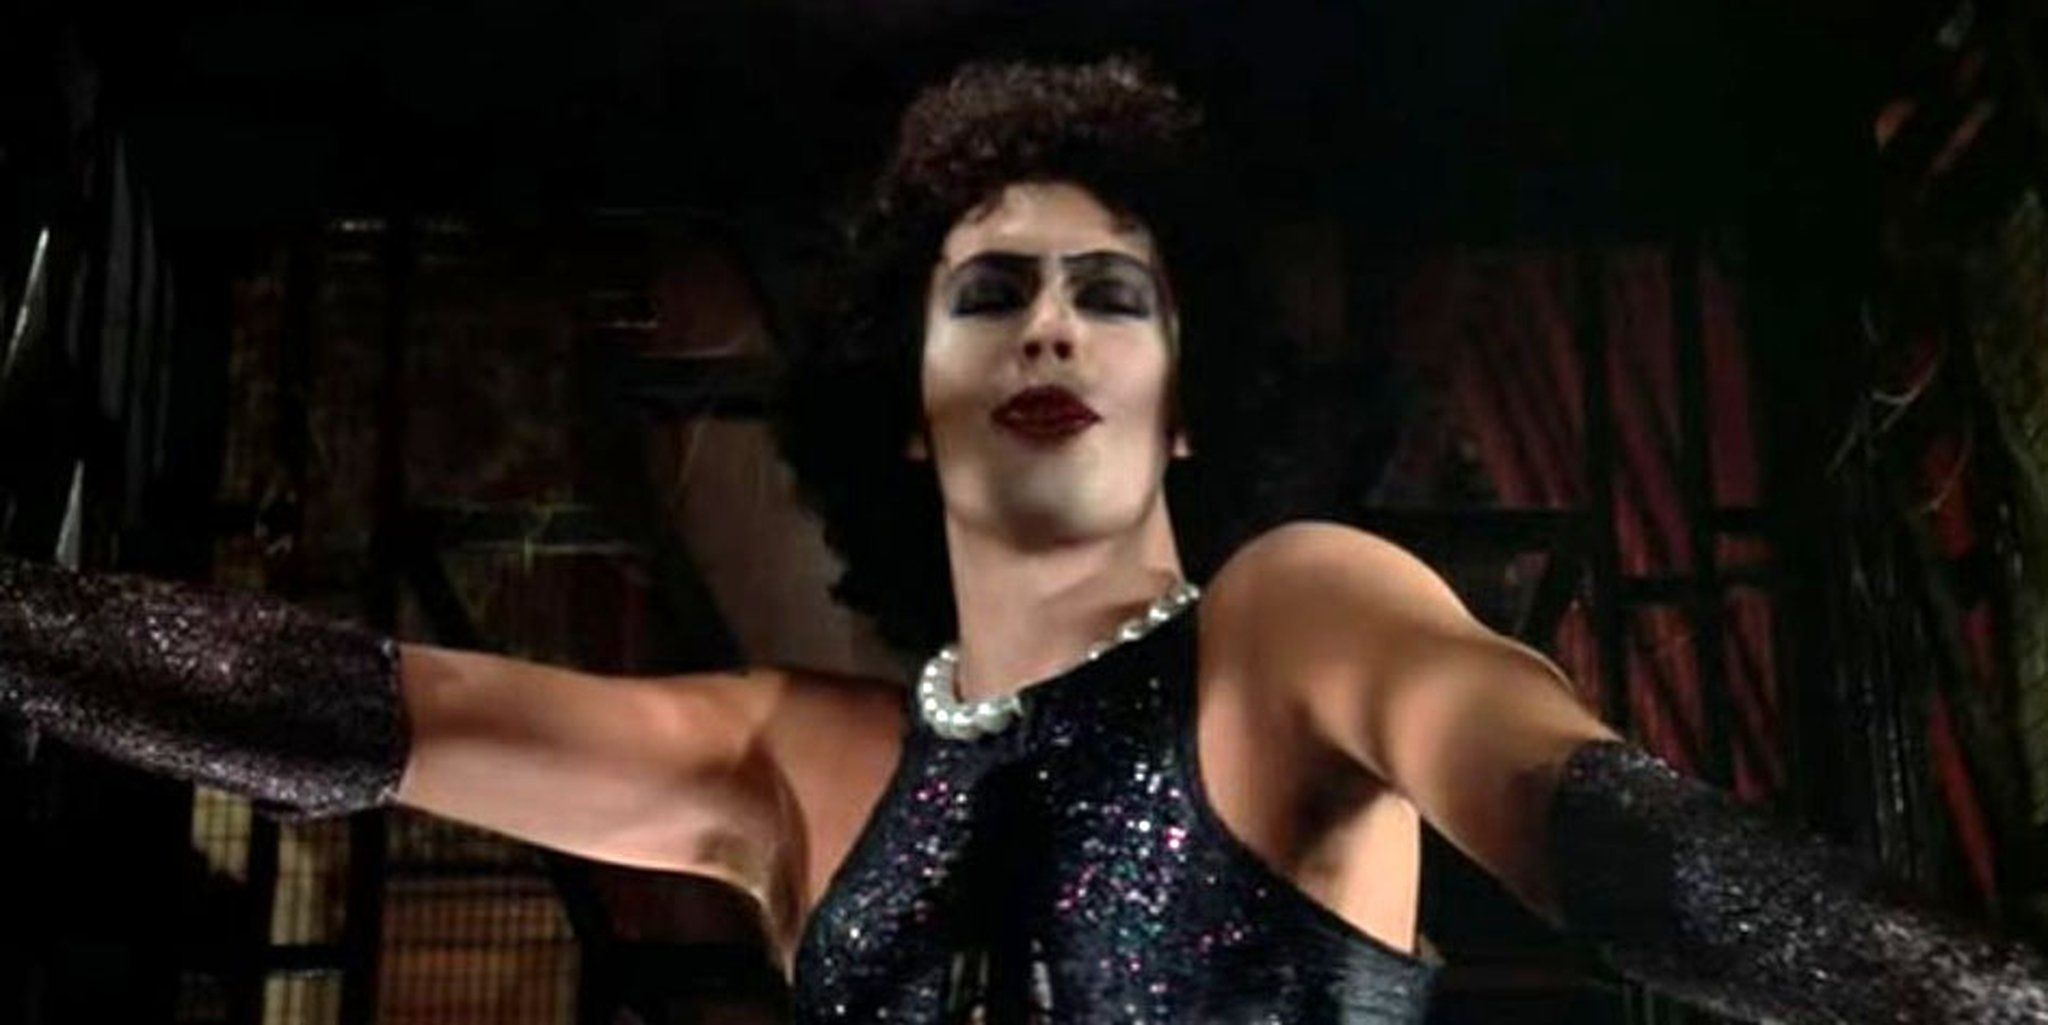 Rocky horror picture show transvestite